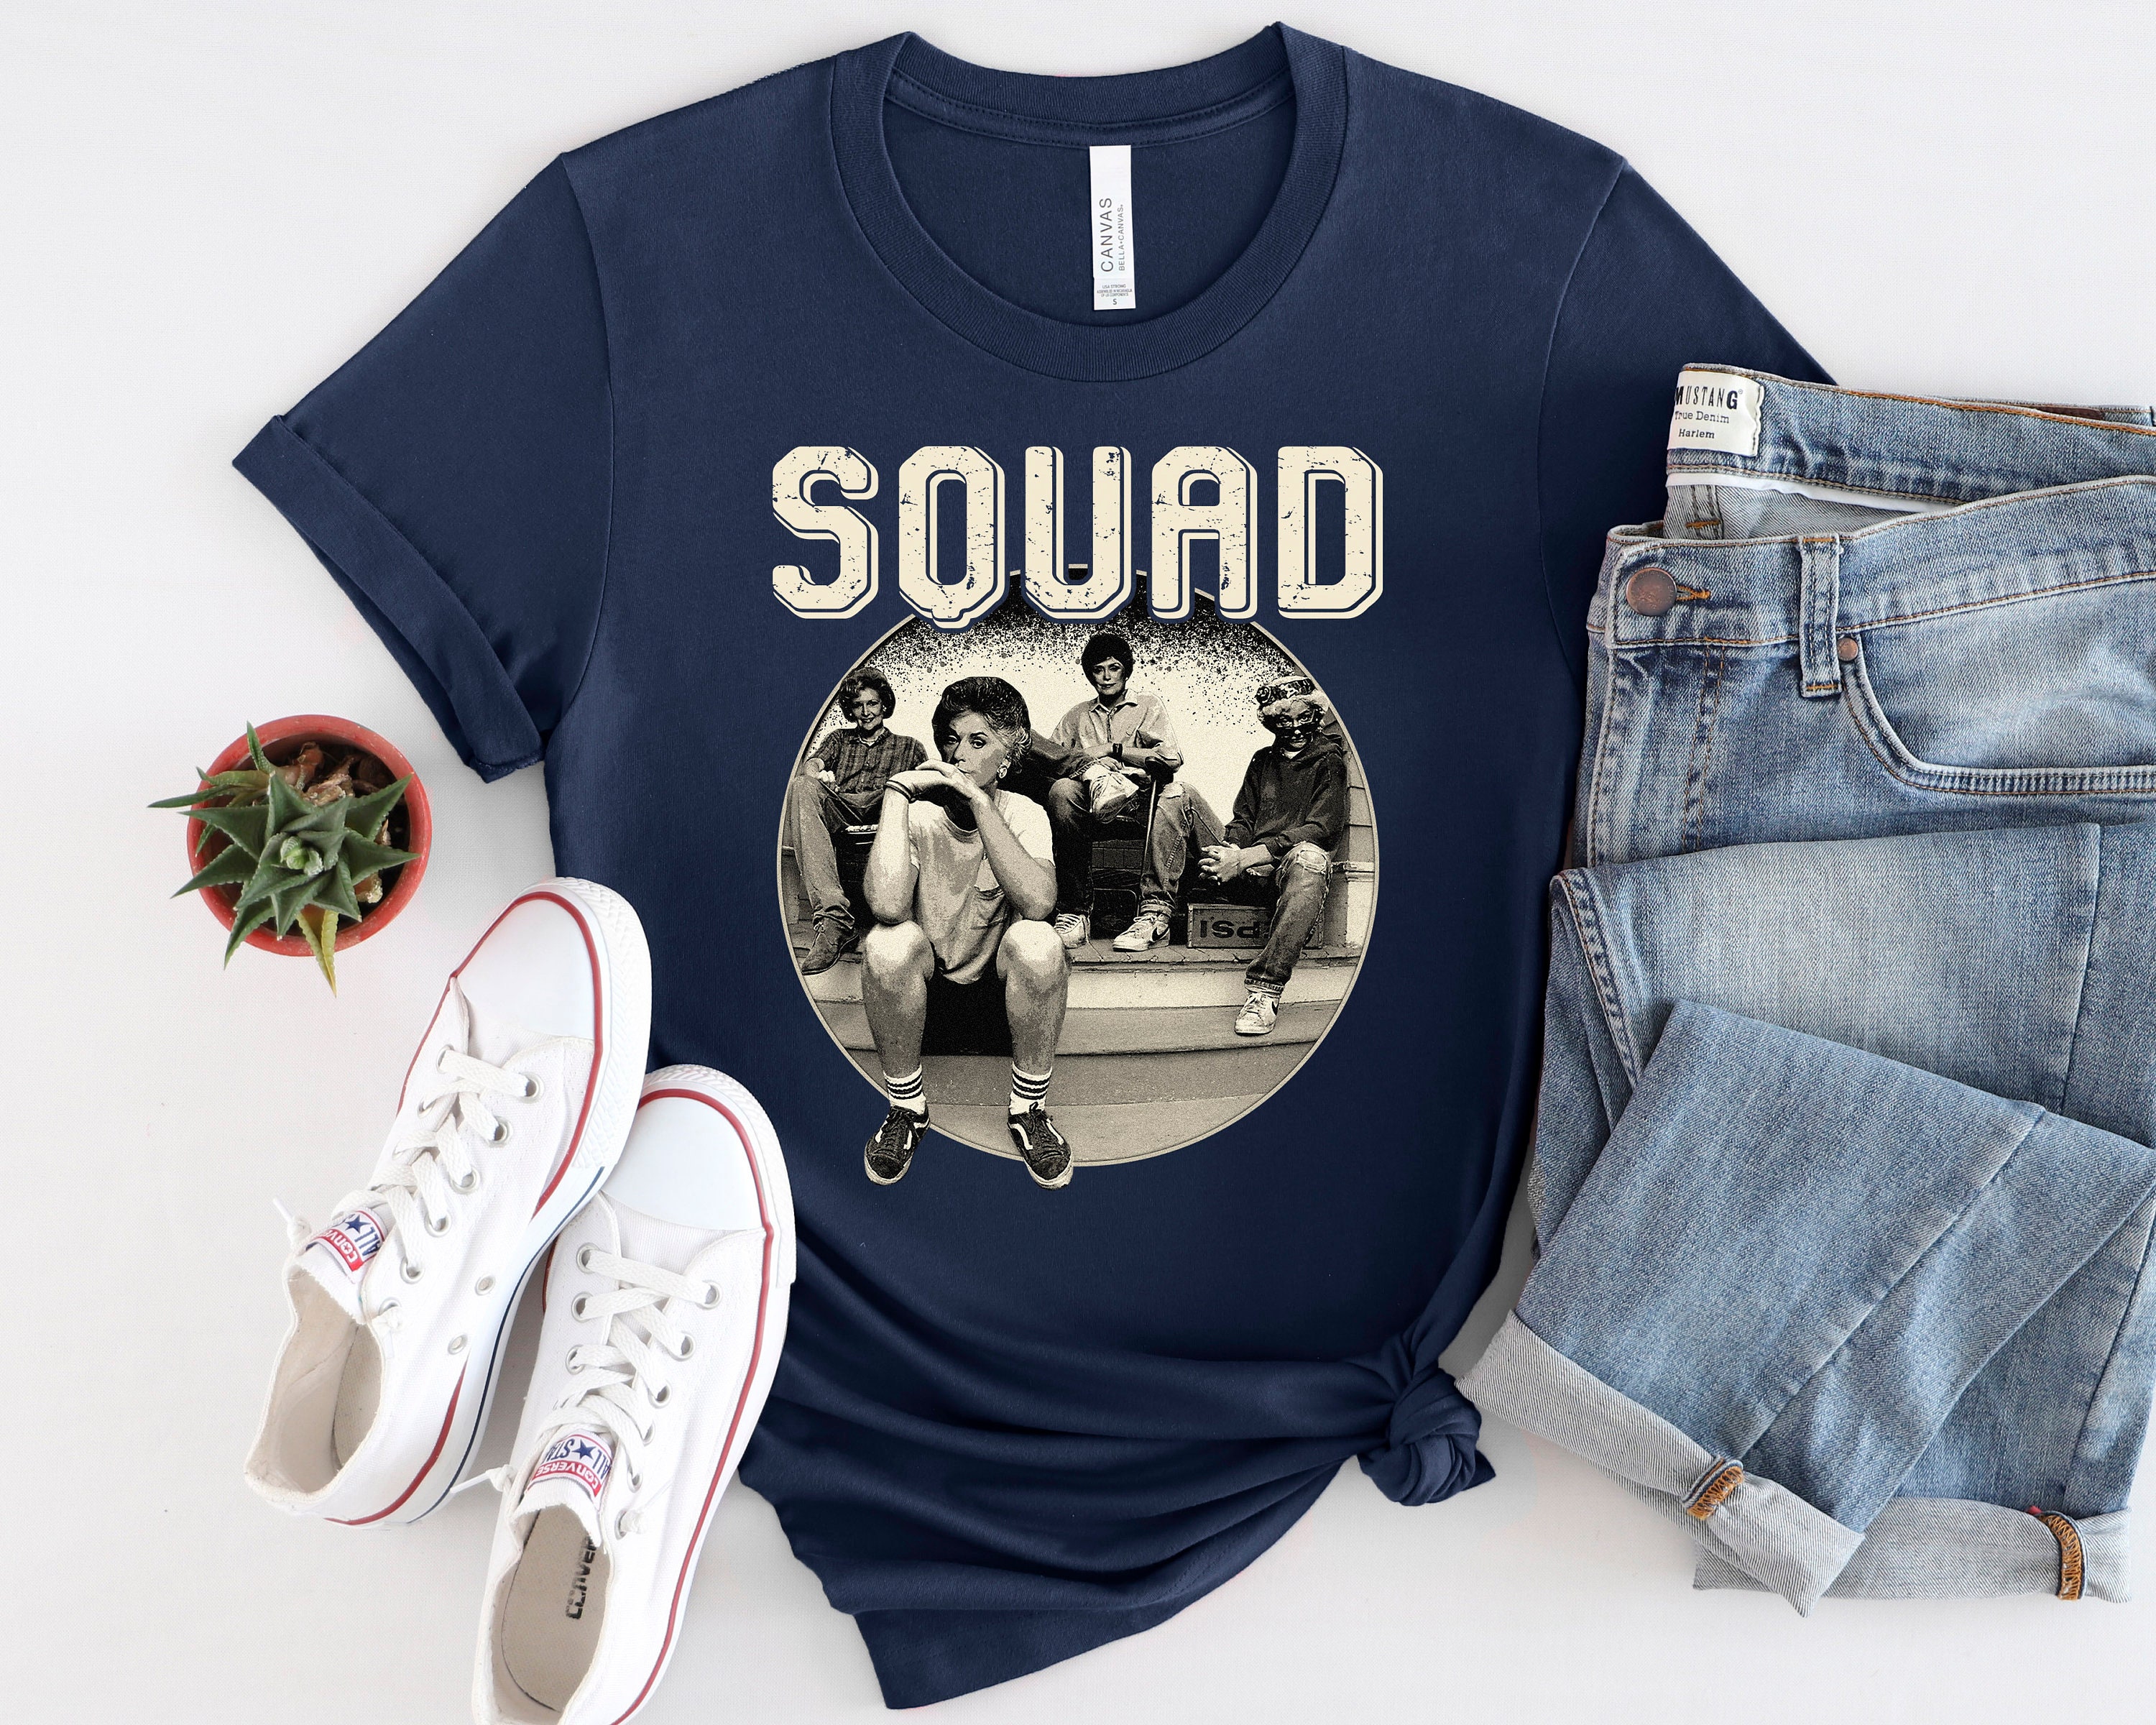 Hot Girls Love My Swag Graphic Funny Shirt Gift Joke T -  Portugal